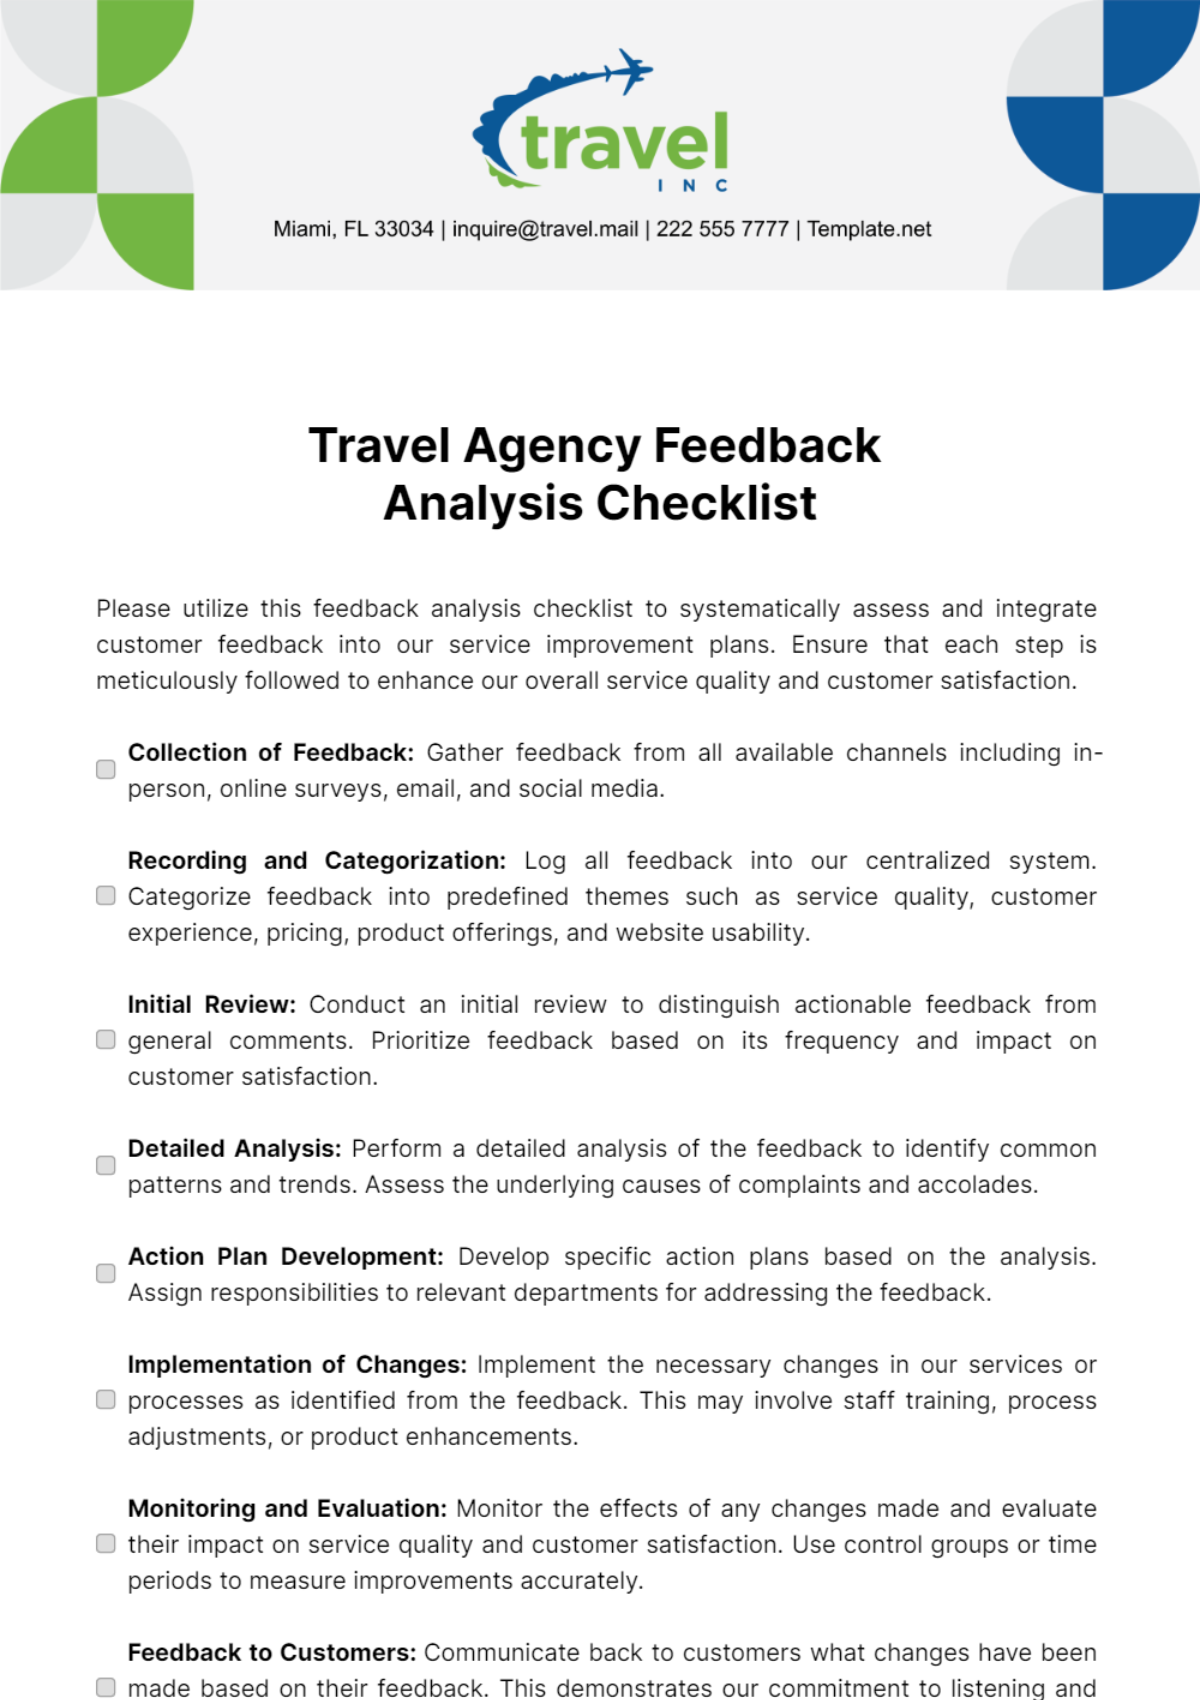 Travel Agency Feedback Analysis Checklist Template